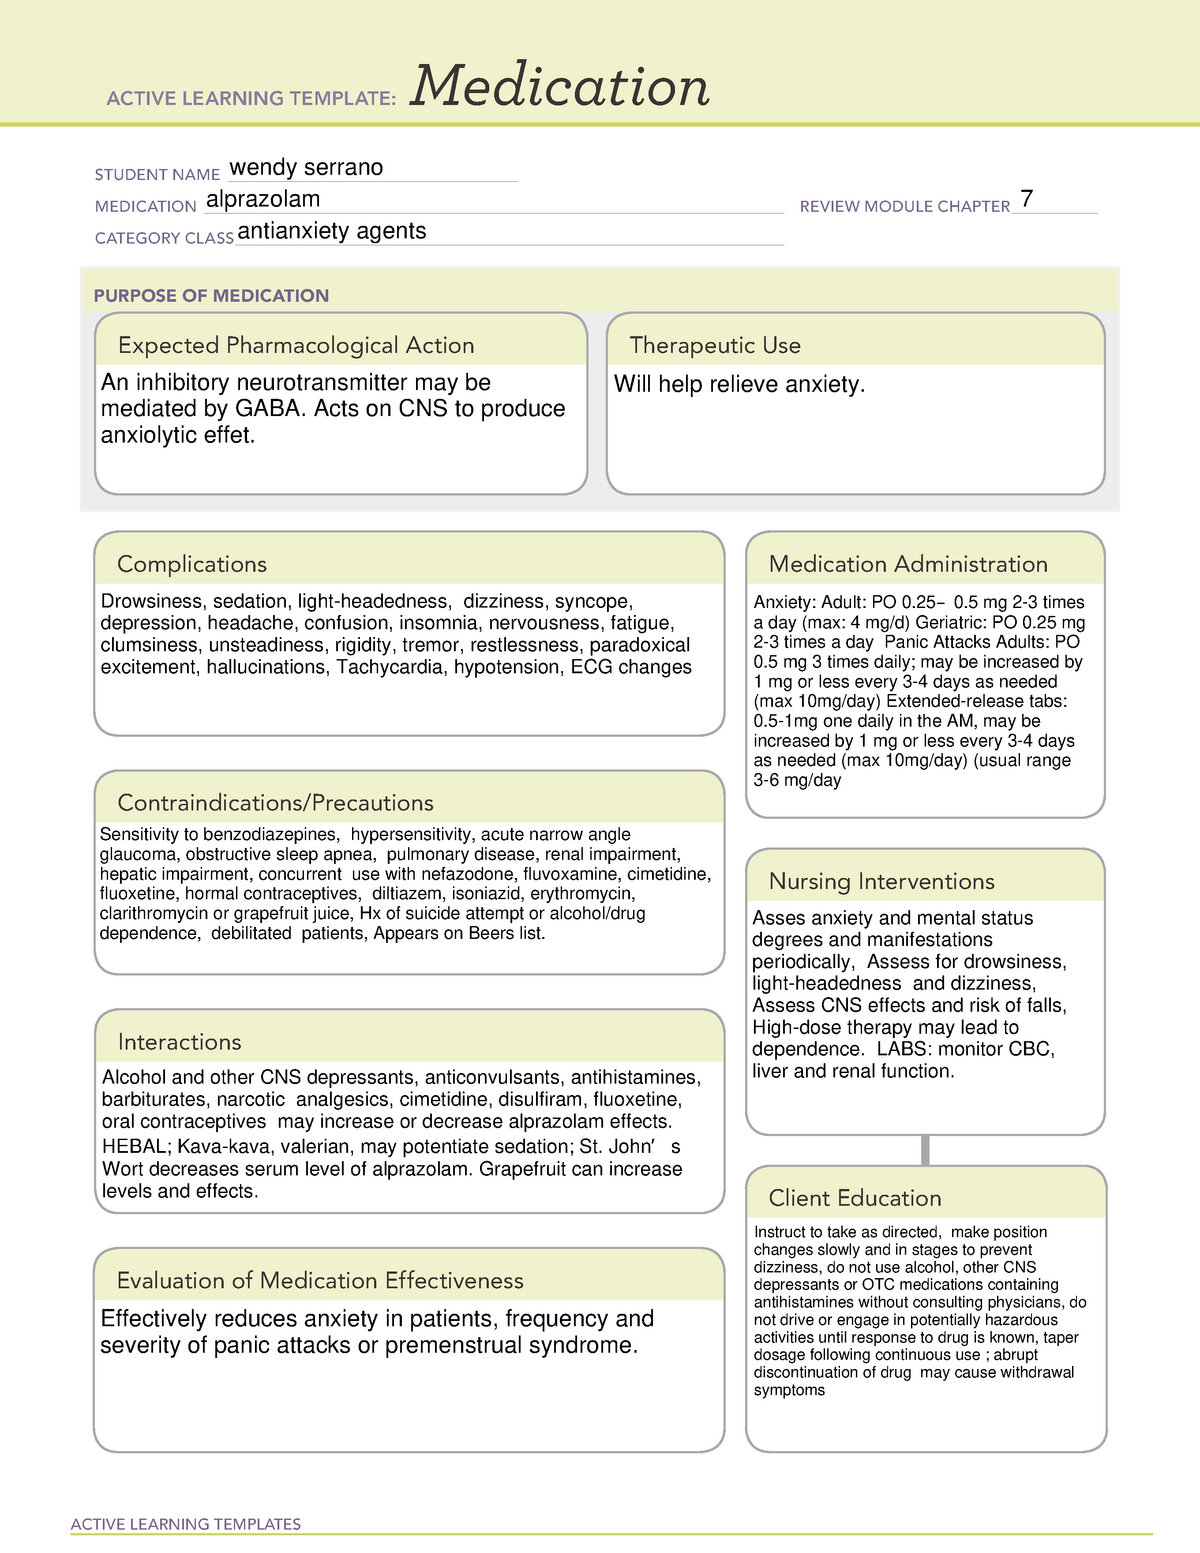 ati-medication-template-15-active-learning-templates-medication-student-name-studocu